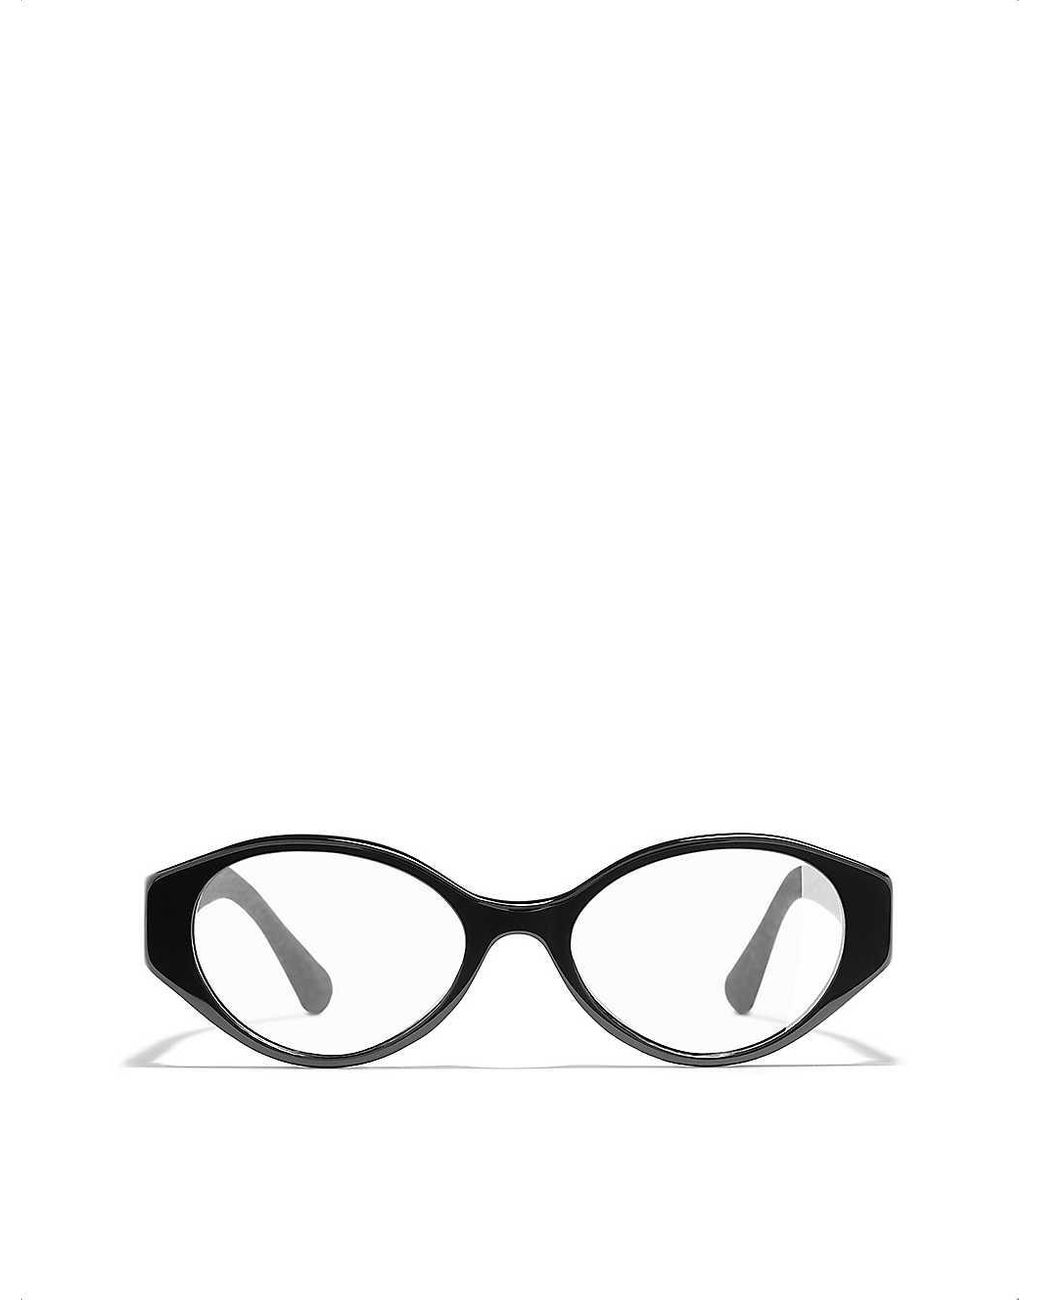 Chanel Oval Eyeglasses in Black